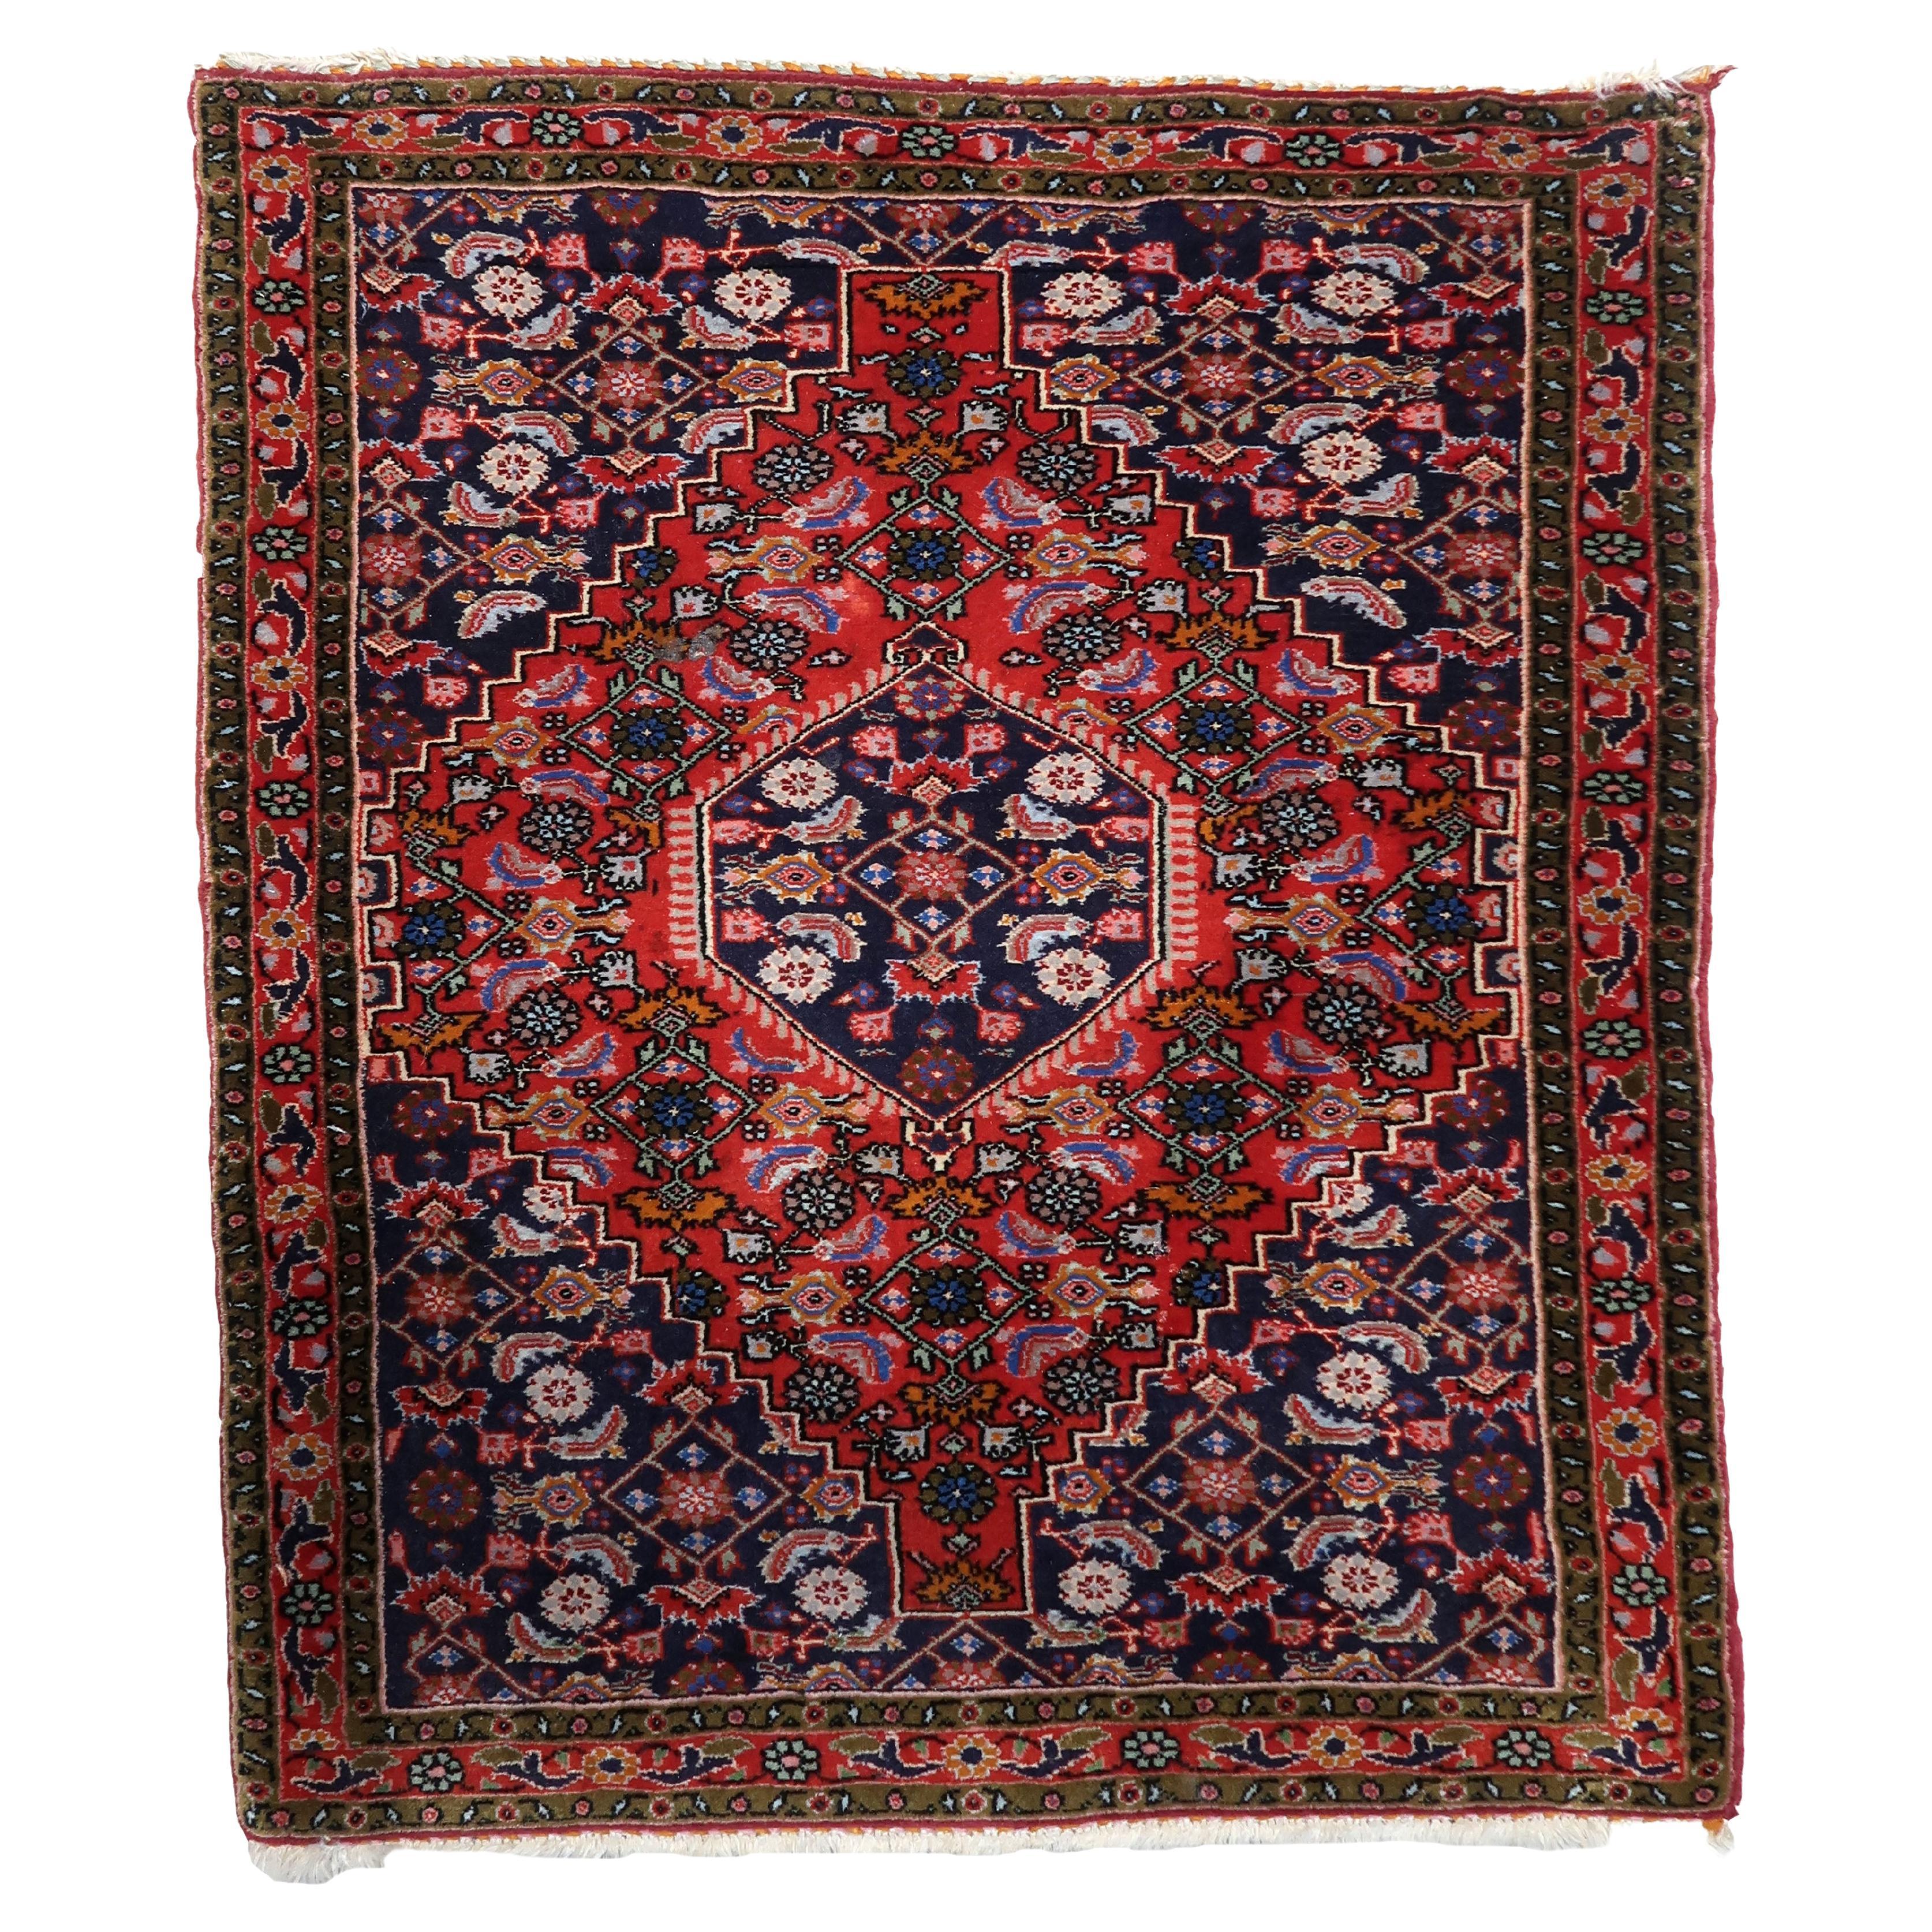 Handmade Vintage Persian Style Tabriz Rug 1960s - 1C1076 For Sale